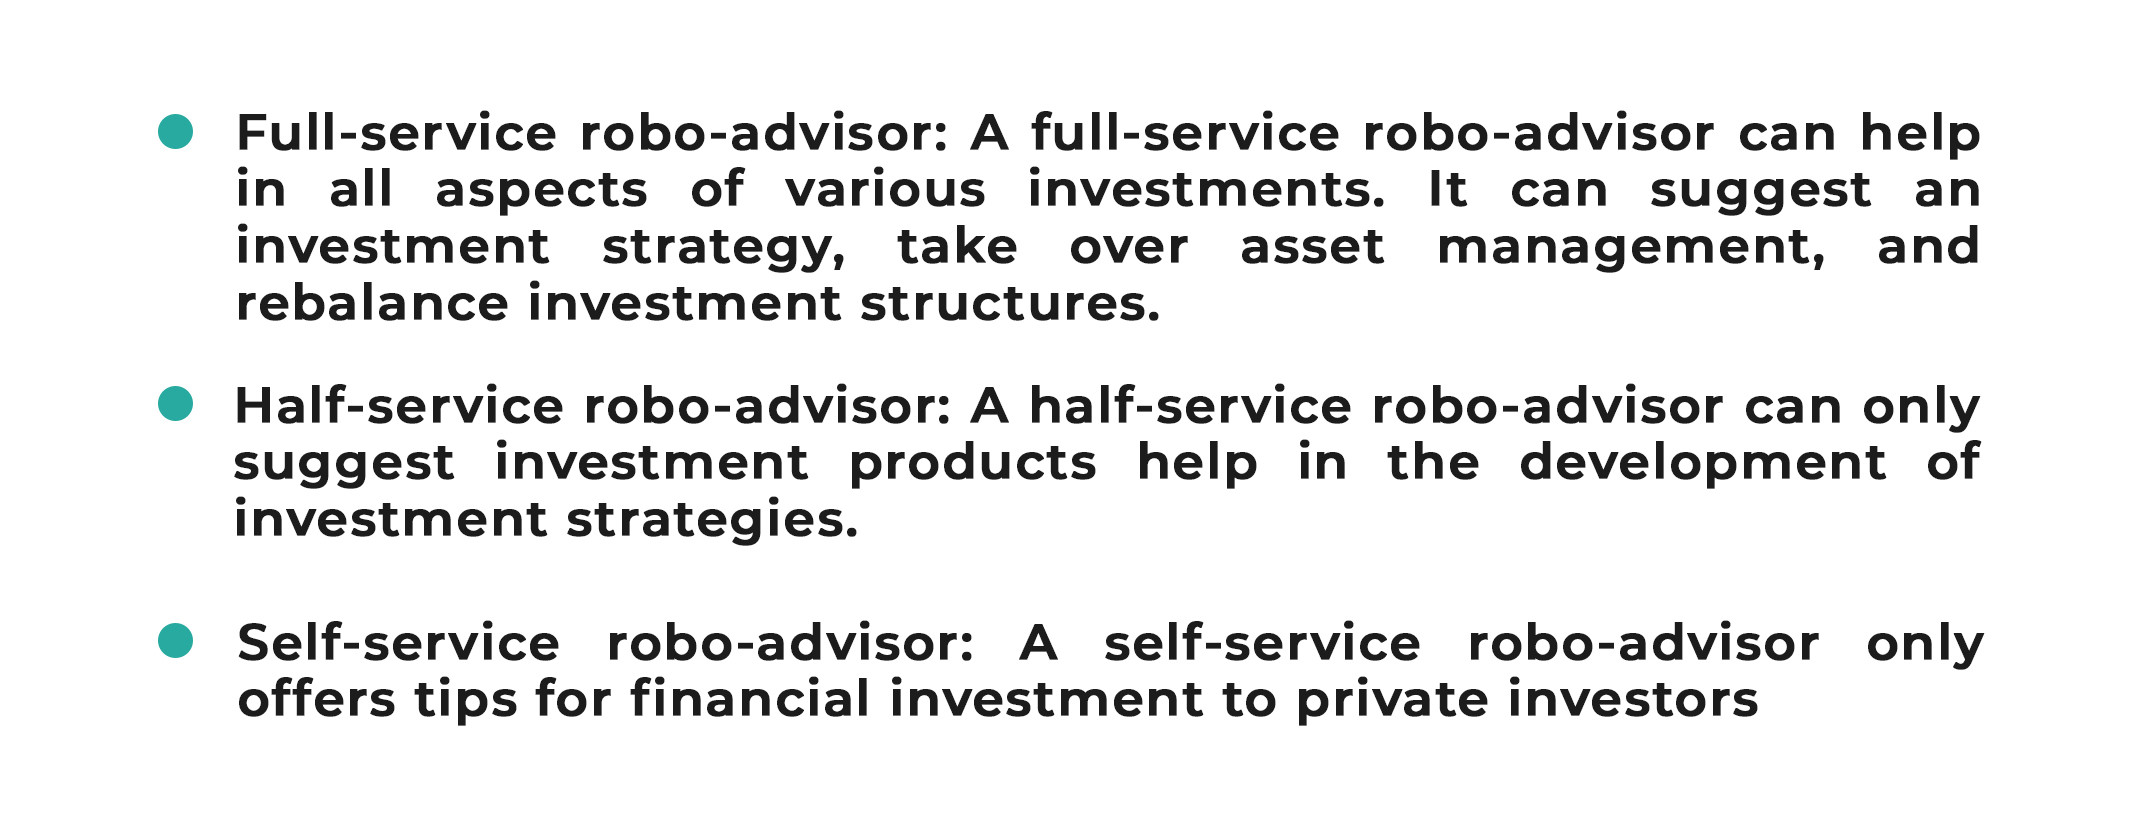 The description of three types of Robo-advisors